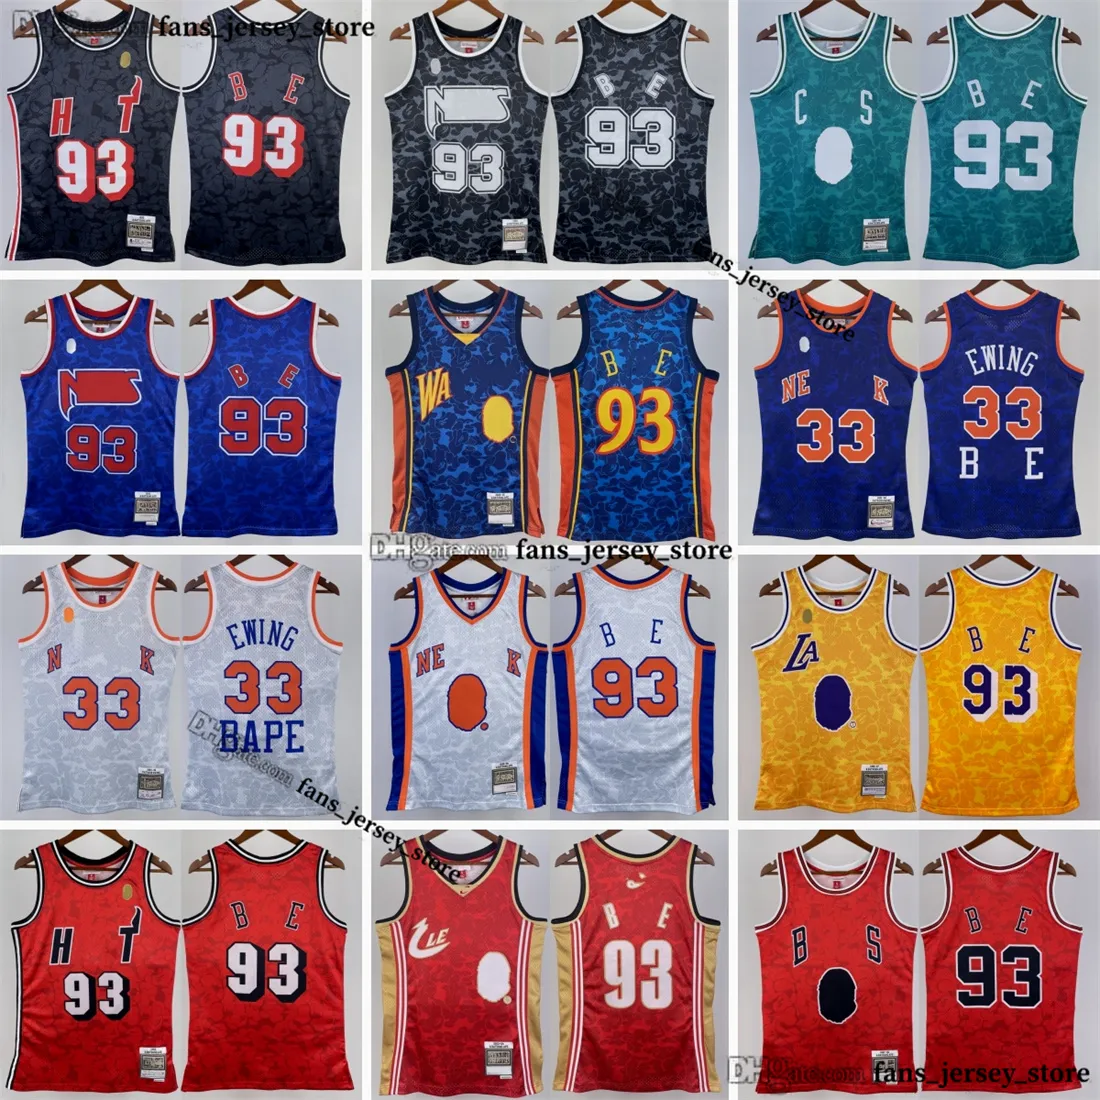 Printed Classic Vintage 1993 Basketball #93 B A P E Jersey Retro White 1991-92 Blue #33 Patrick Ewing Yellow Purple Red Green Black Jerseys Shirts